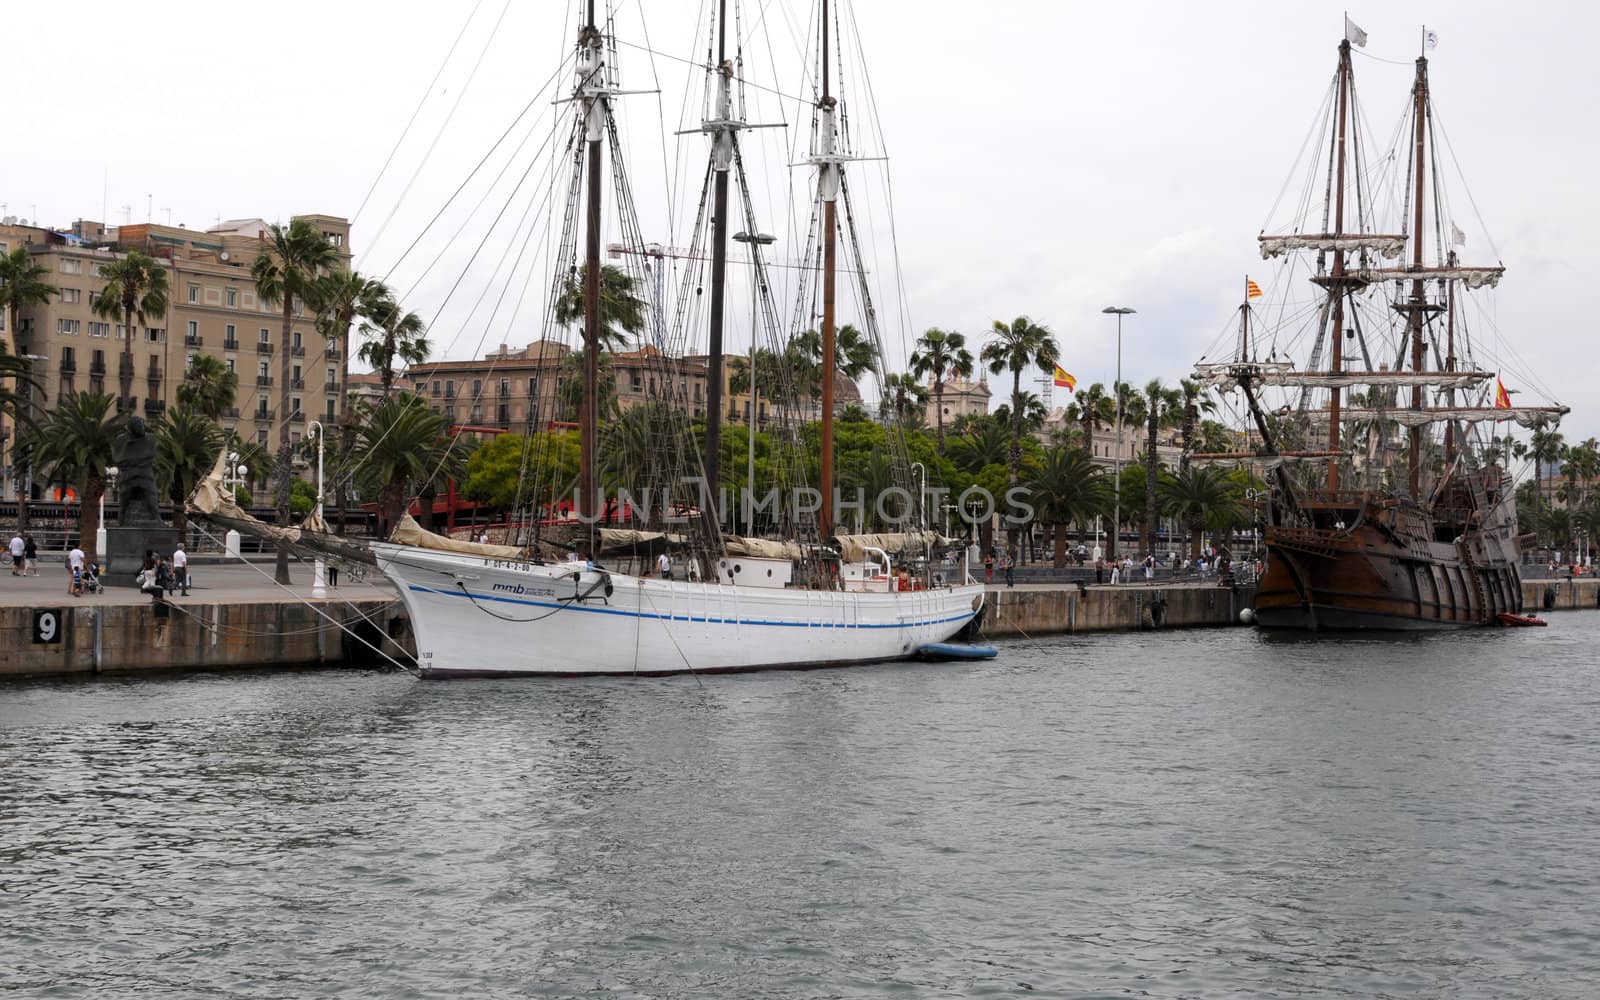 A three mast ship in Barcelona harbor by DNKSTUDIO